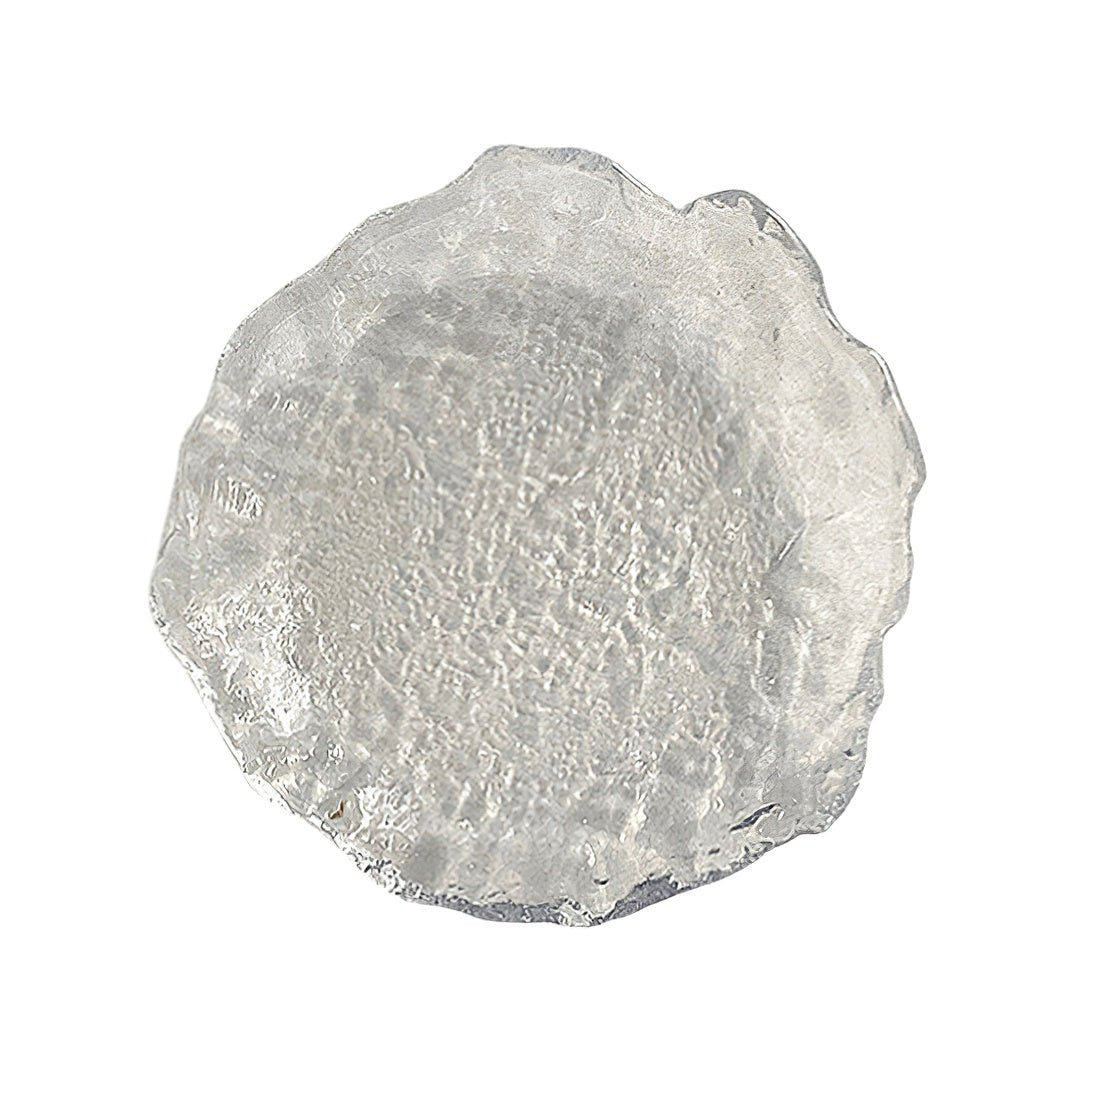 Small, asymmetrical glass plate